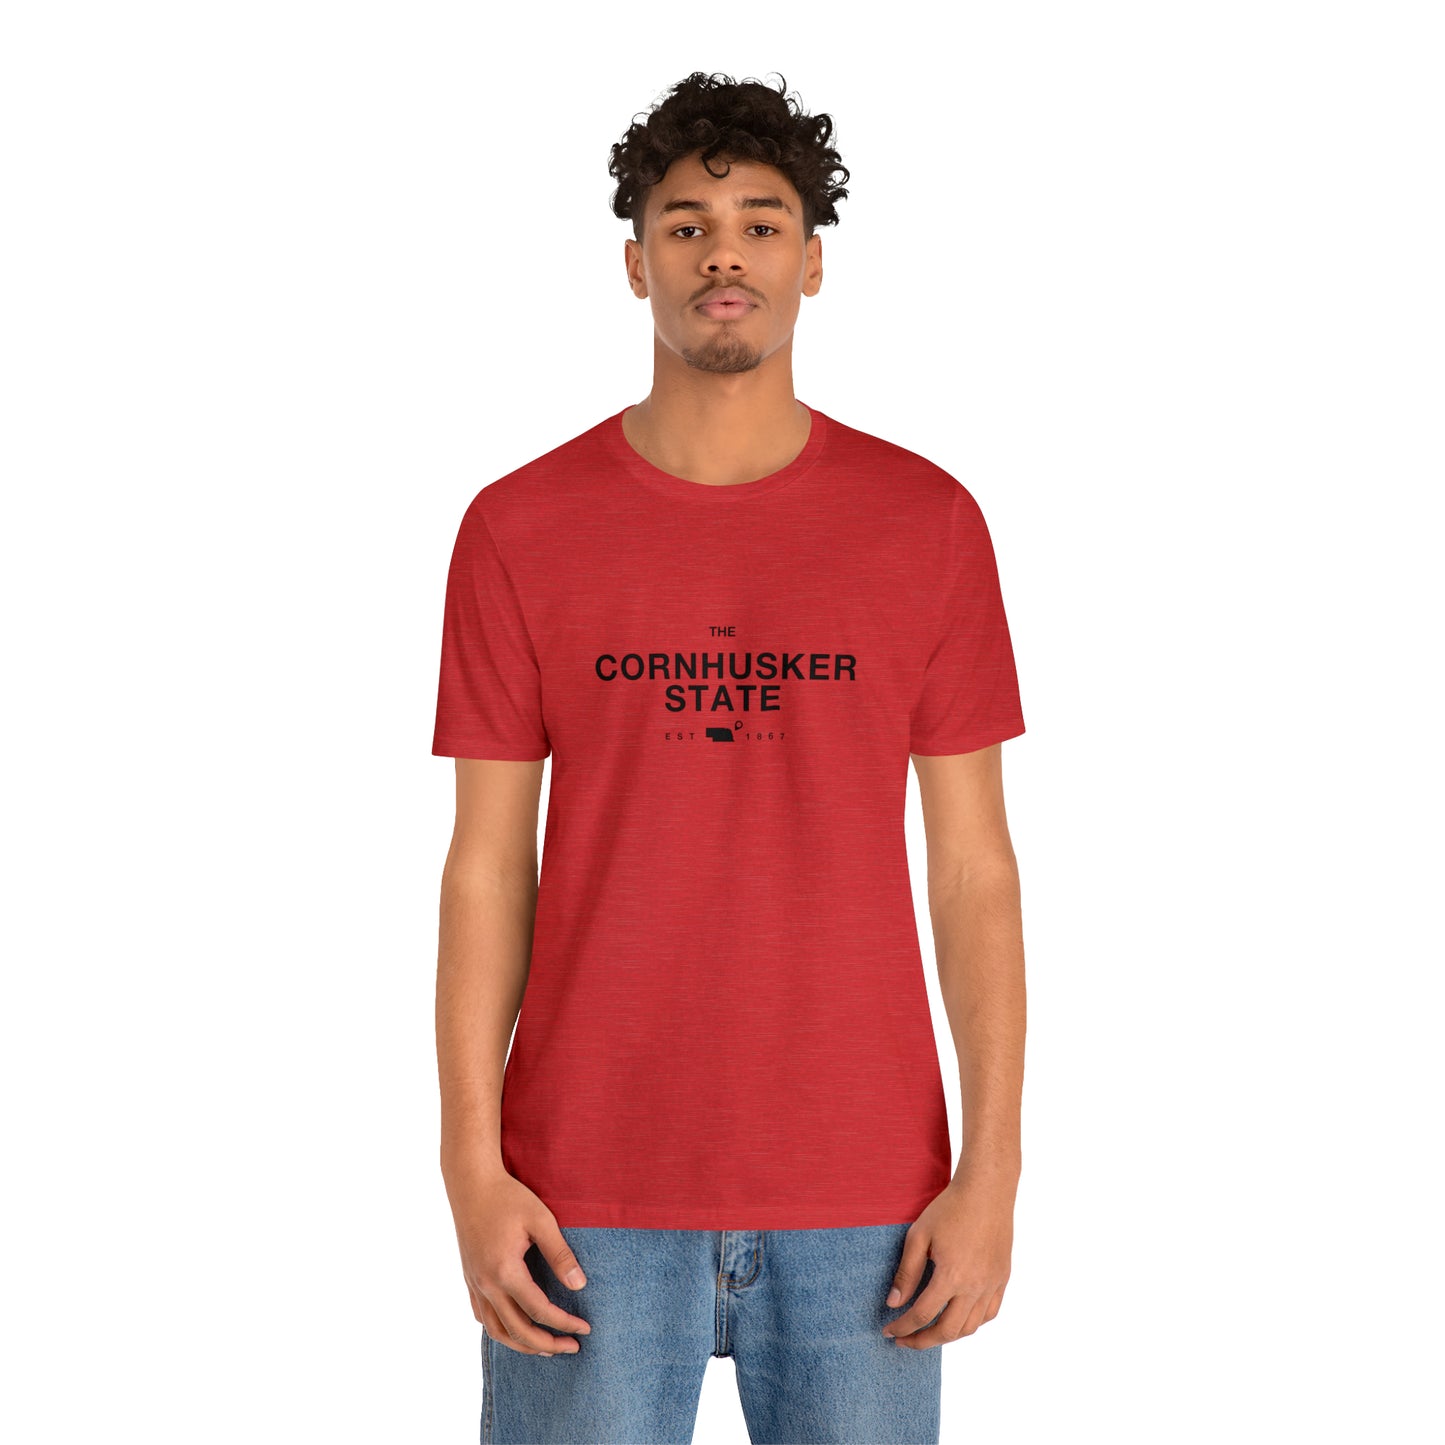 Nebraska Nickname Shirt